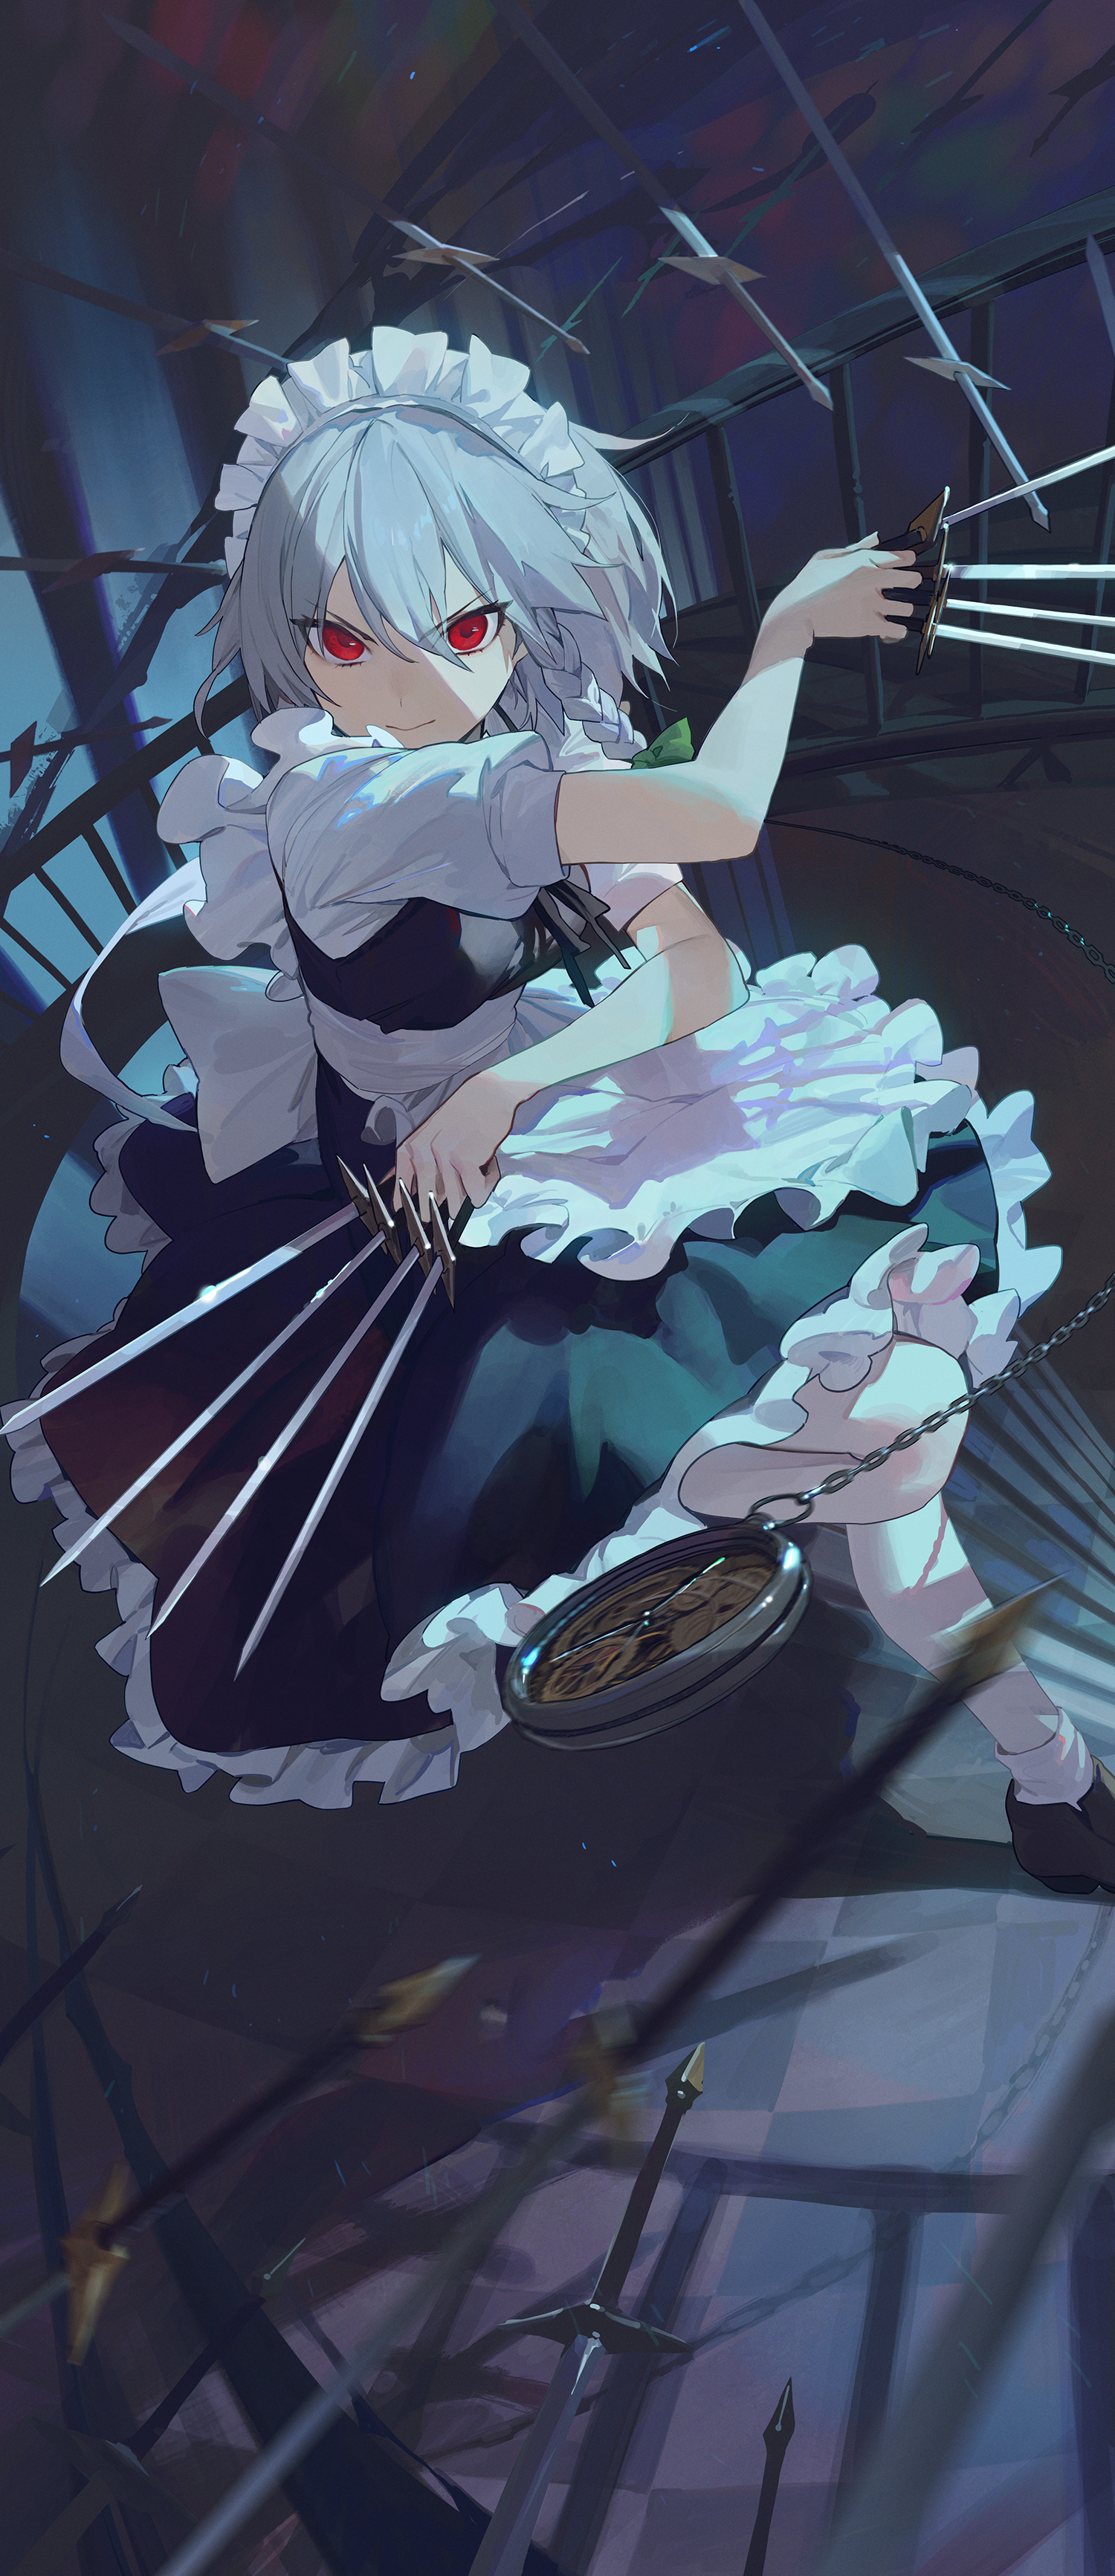 Anime 1500x3467 anime anime girls Touhou Izayoi Sakuya knife red eyes white hair maid maid outfit artwork Mossi (artist)